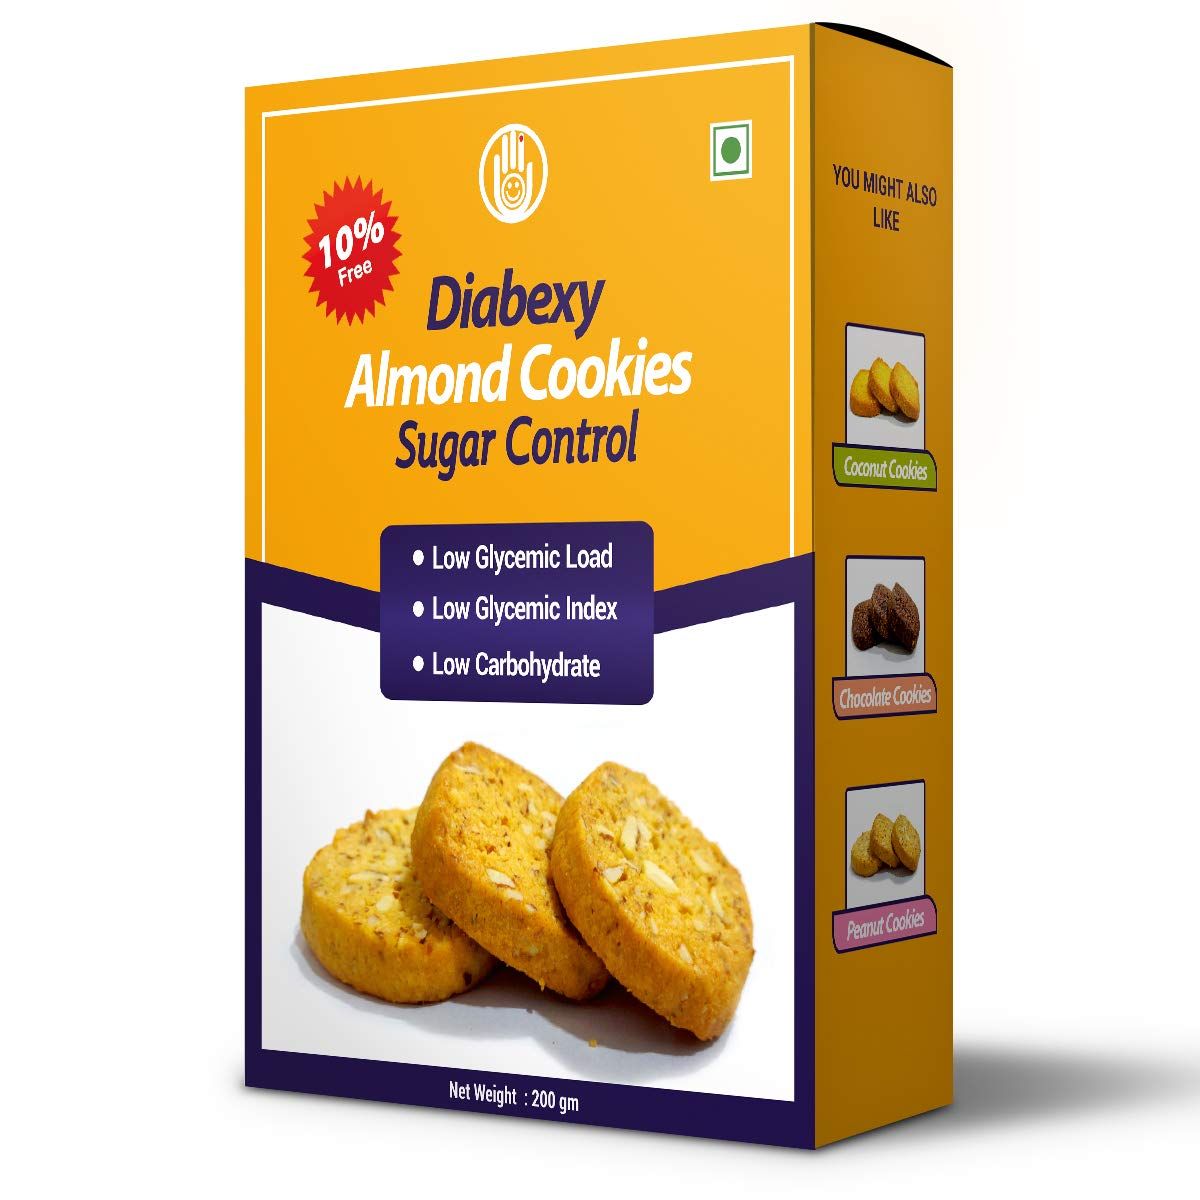 Diabexy Almond Cookie Sugar Control for Diabetes Image